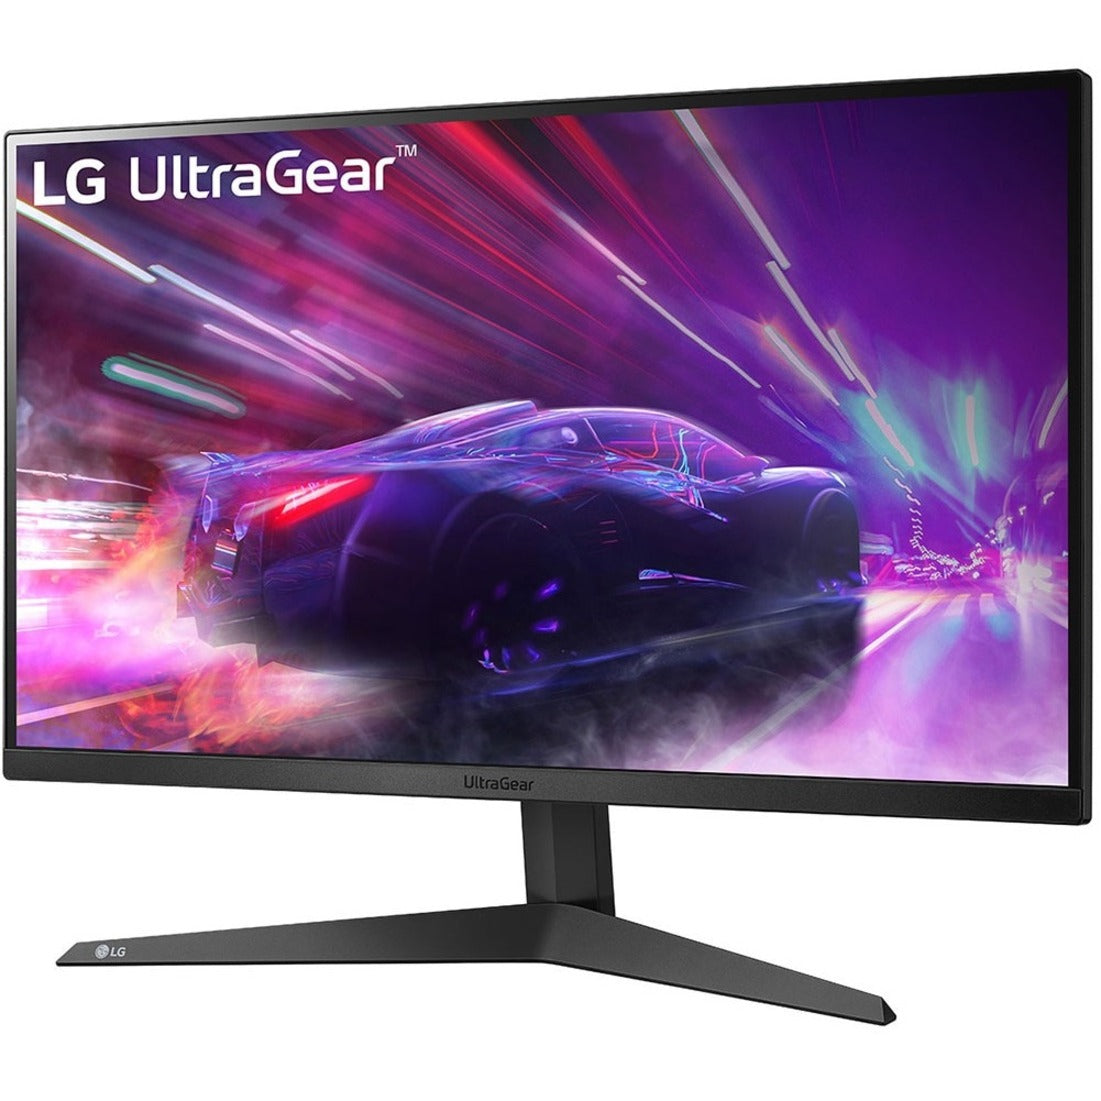 LG 27GQ50F-B UltraGear 27" Full HD Gaming Monitor, 1ms Response Time, FreeSync Premium